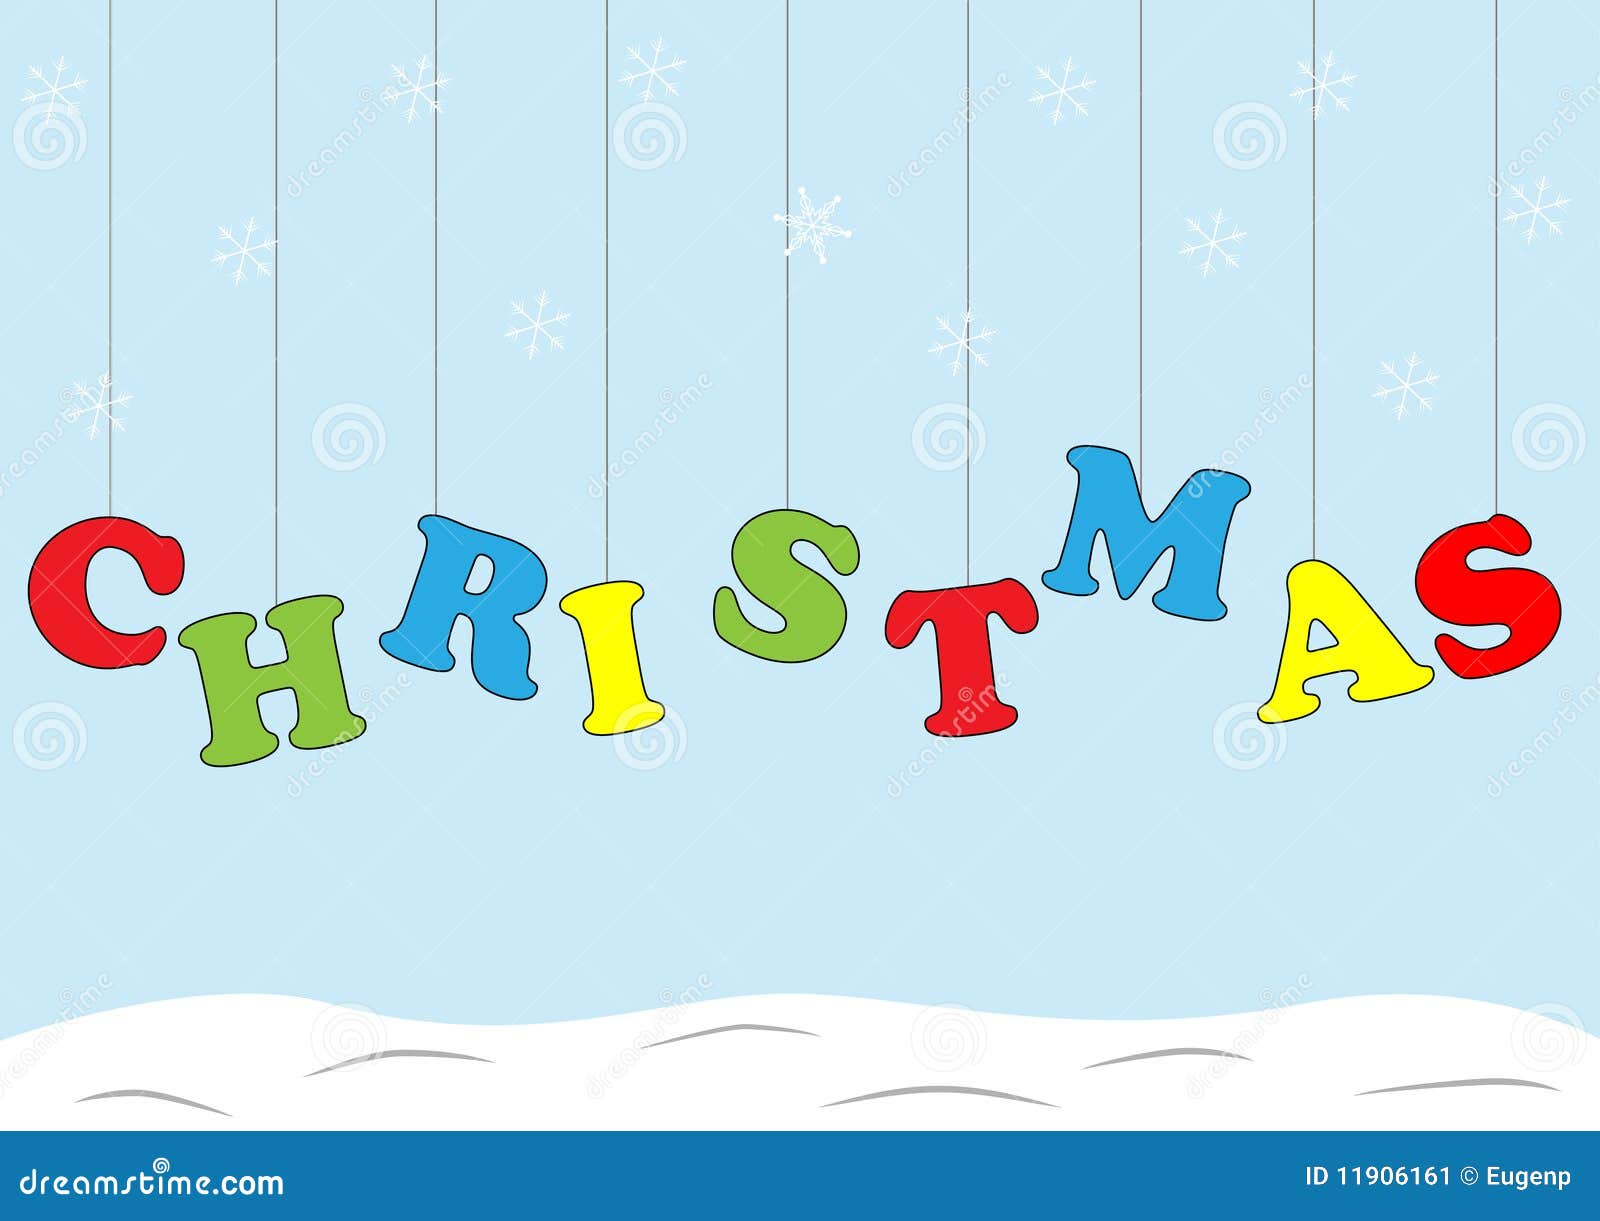 christmas-card-letters-11906161.jpg